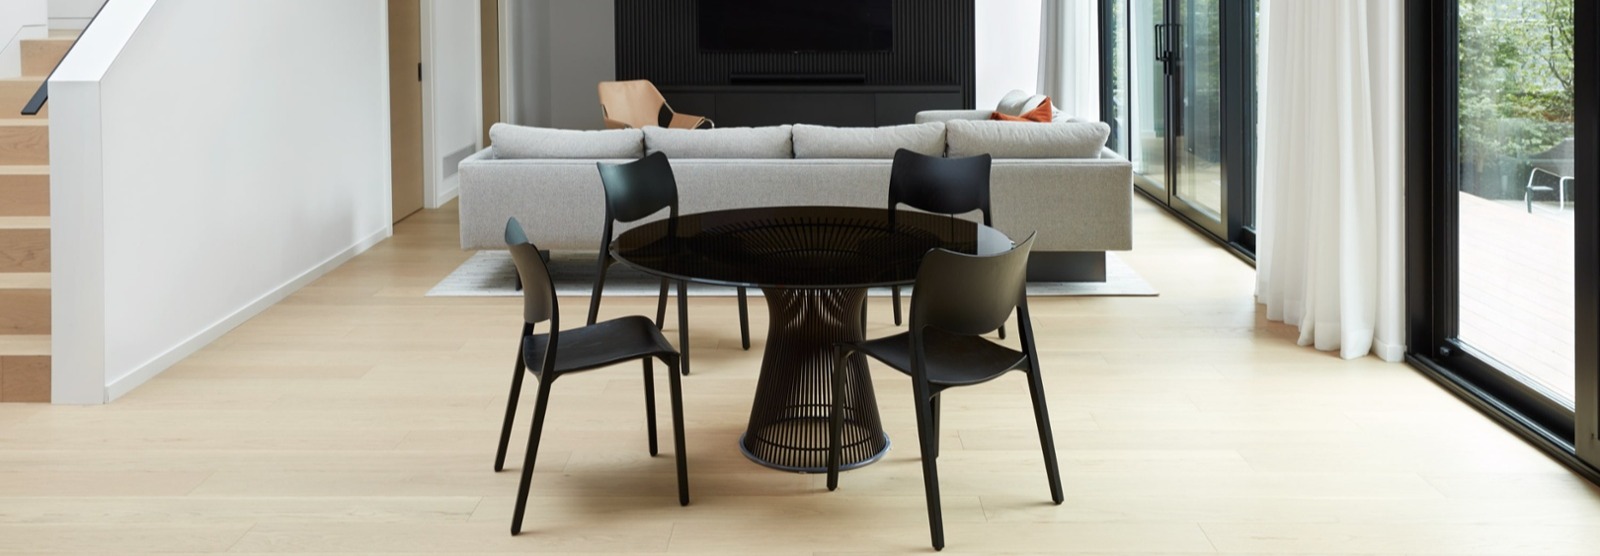 minimal modern living room with new level flooring